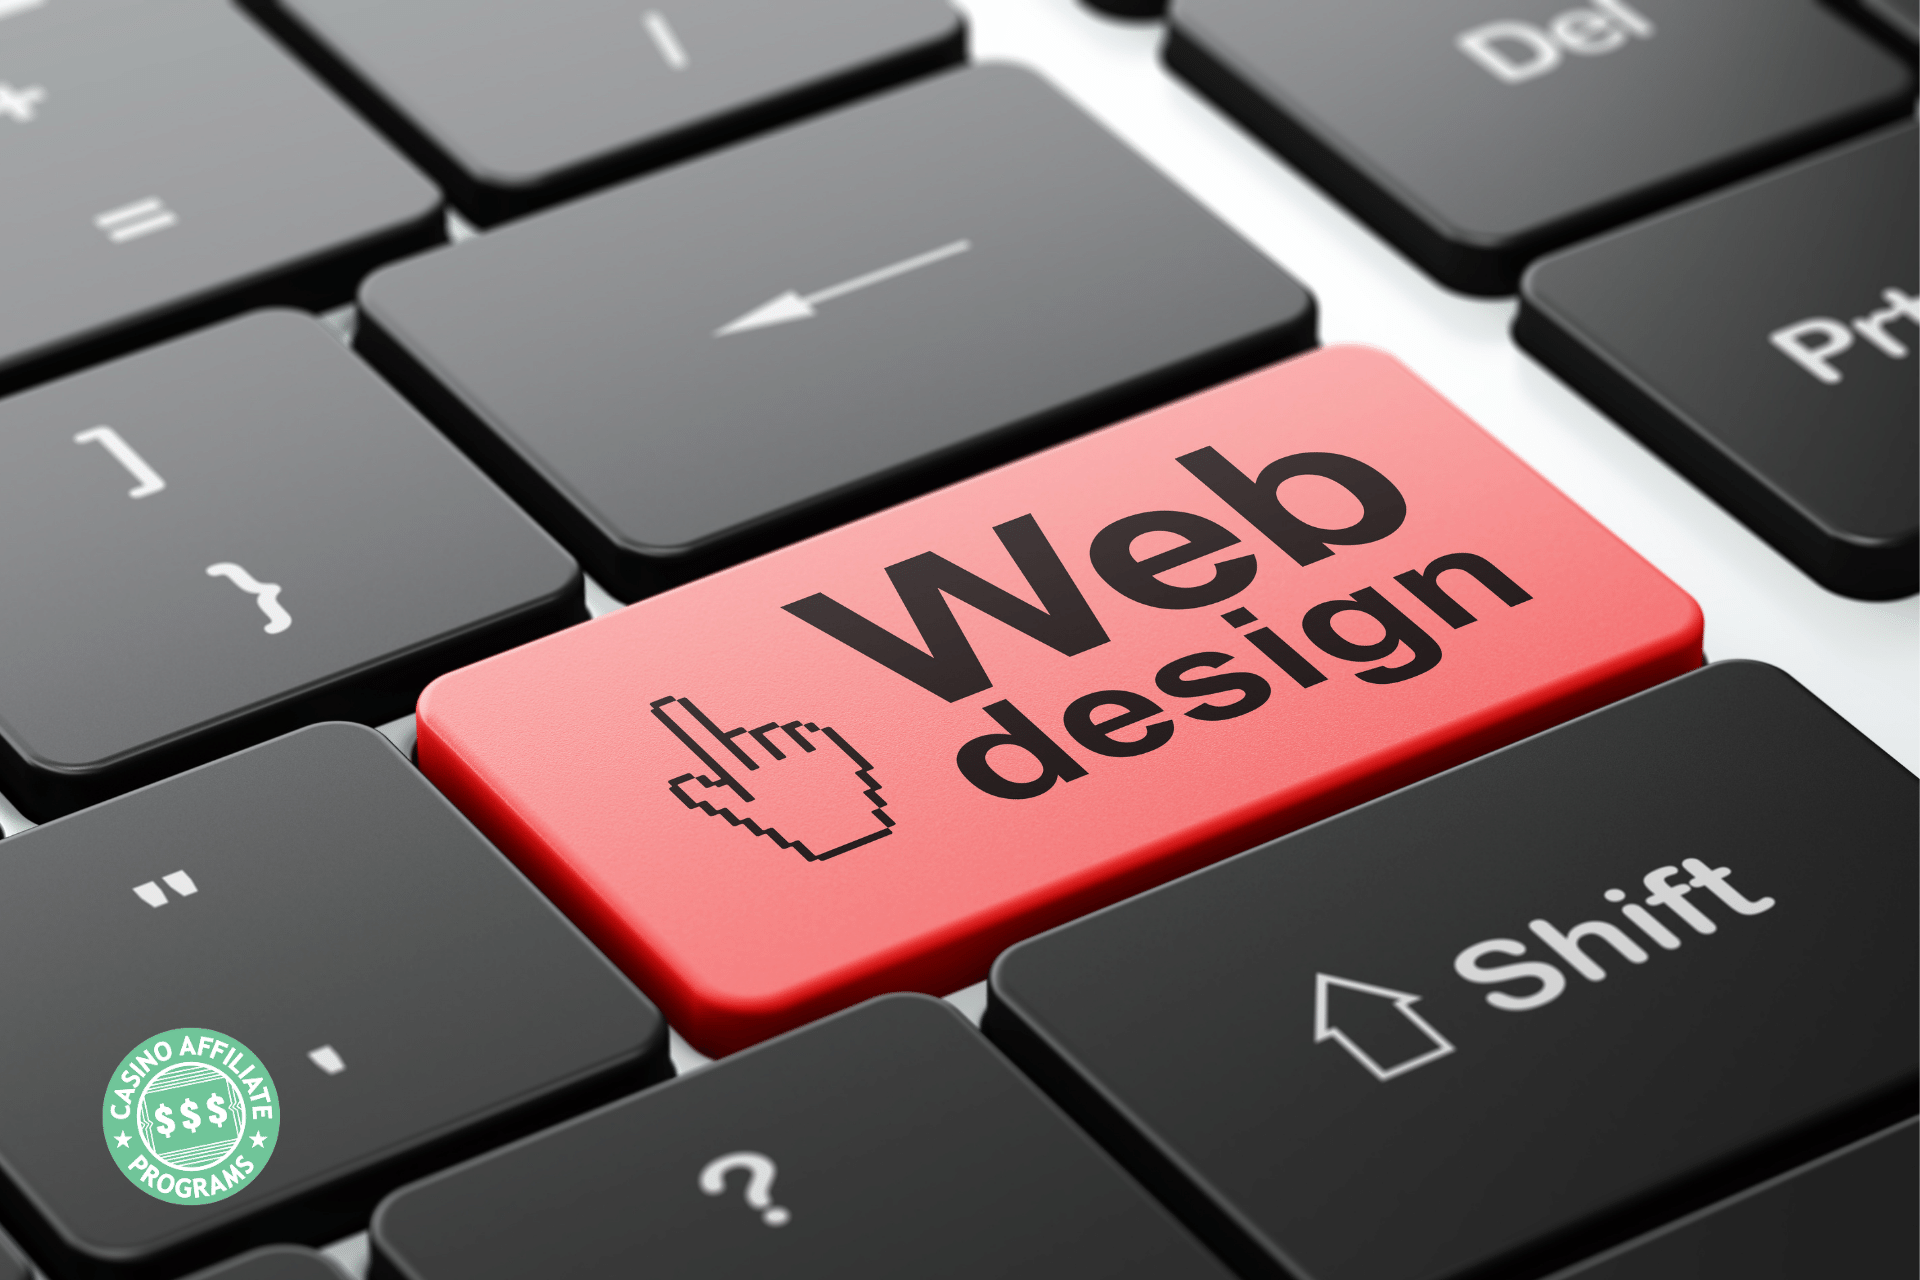 New Trends in Web Design